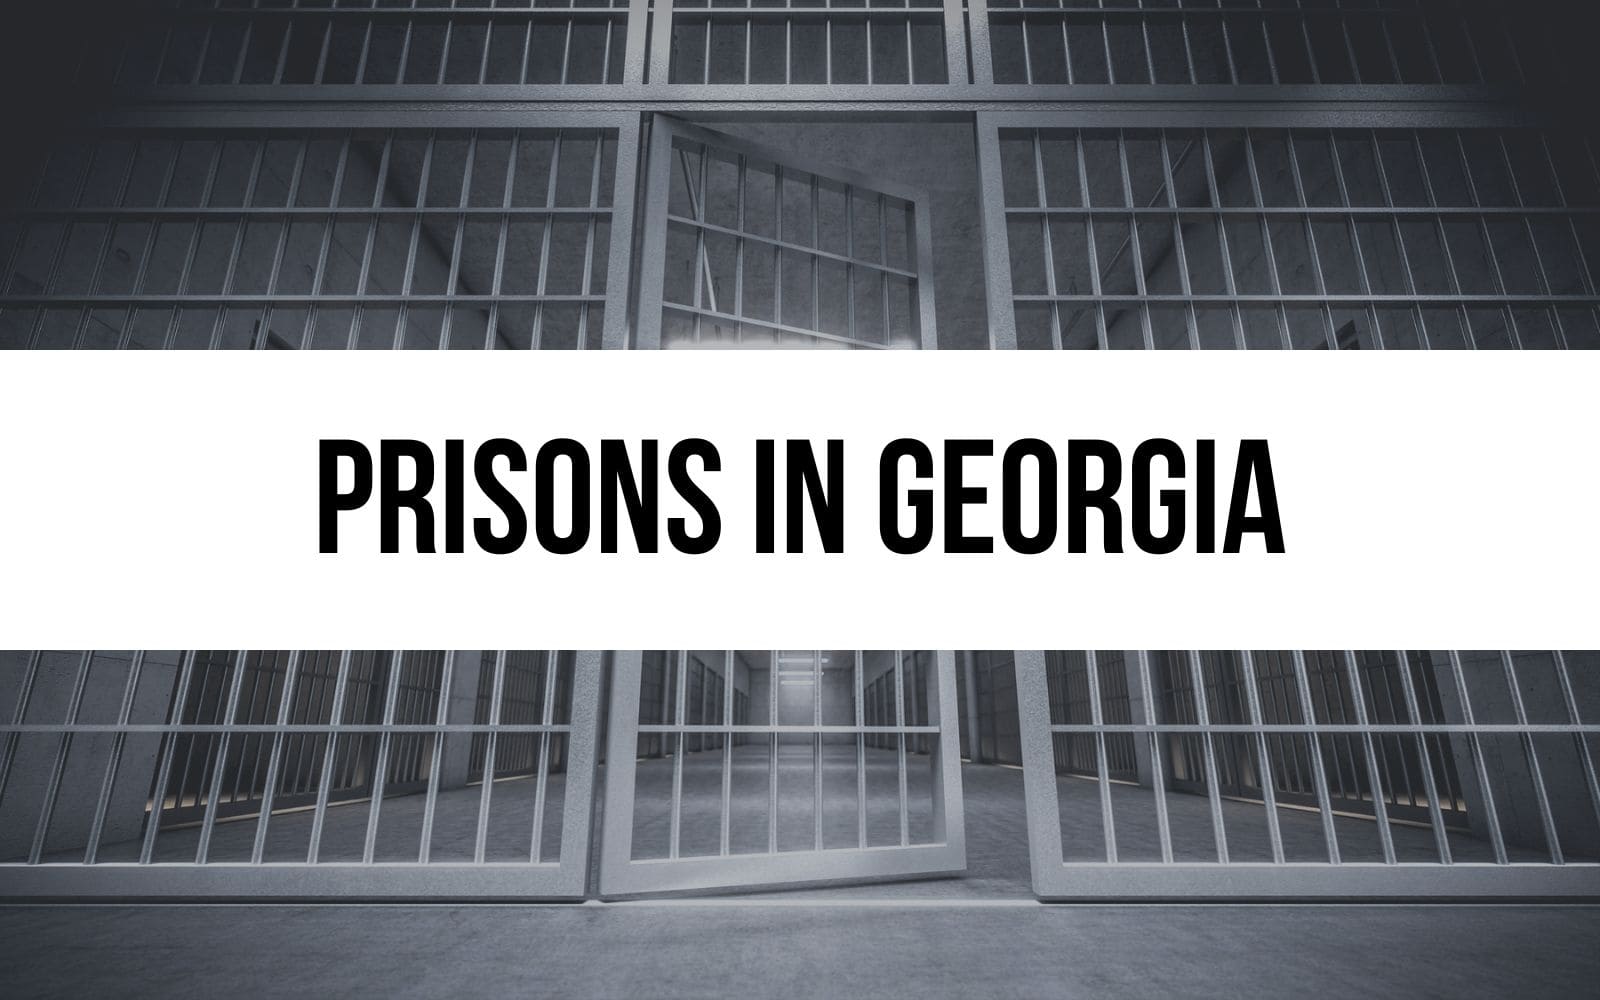 Prisons in Georgia